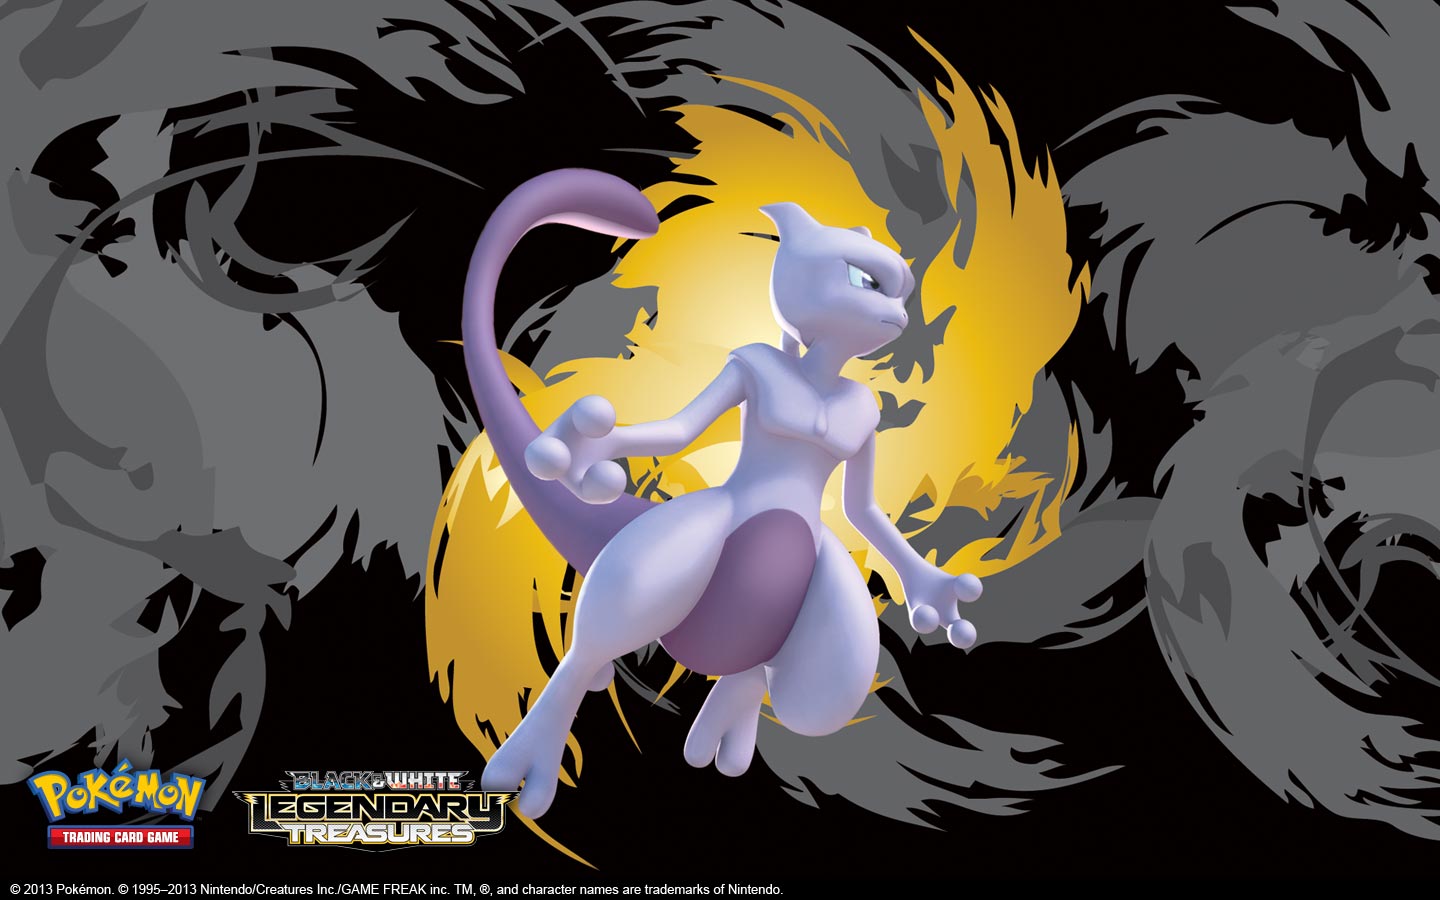 The Official Pokémon Website | Pokemon.com1440 x 900